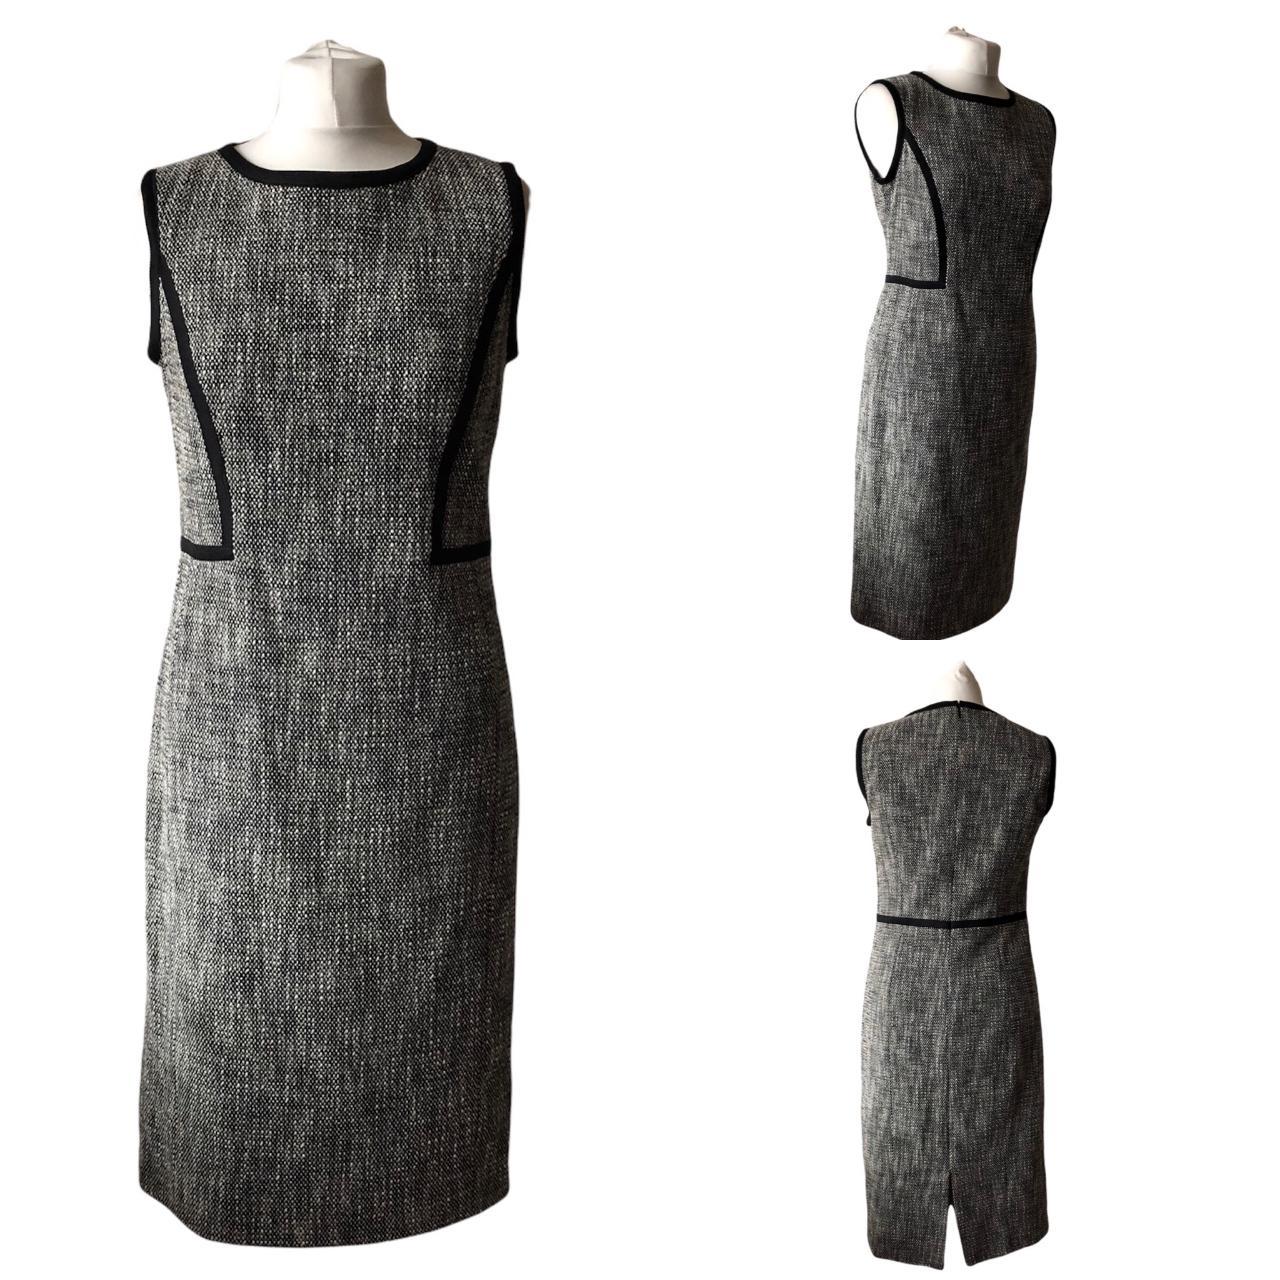 Hobbs Classic Black Tweed Boucle Effect Dress Size... - Depop